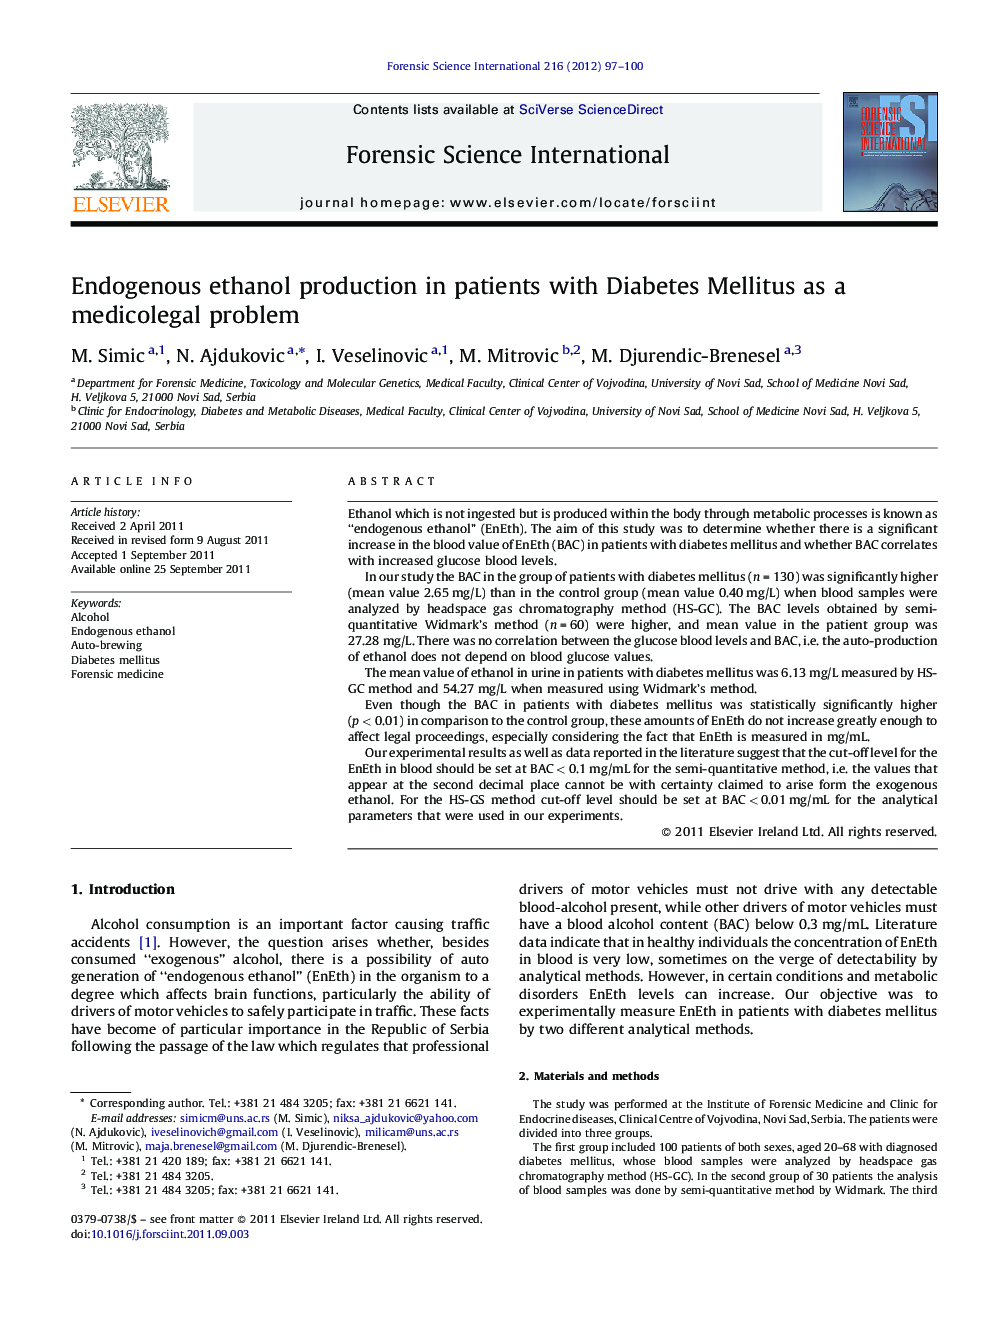 Endogenous ethanol production in patients with Diabetes Mellitus as a medicolegal problem